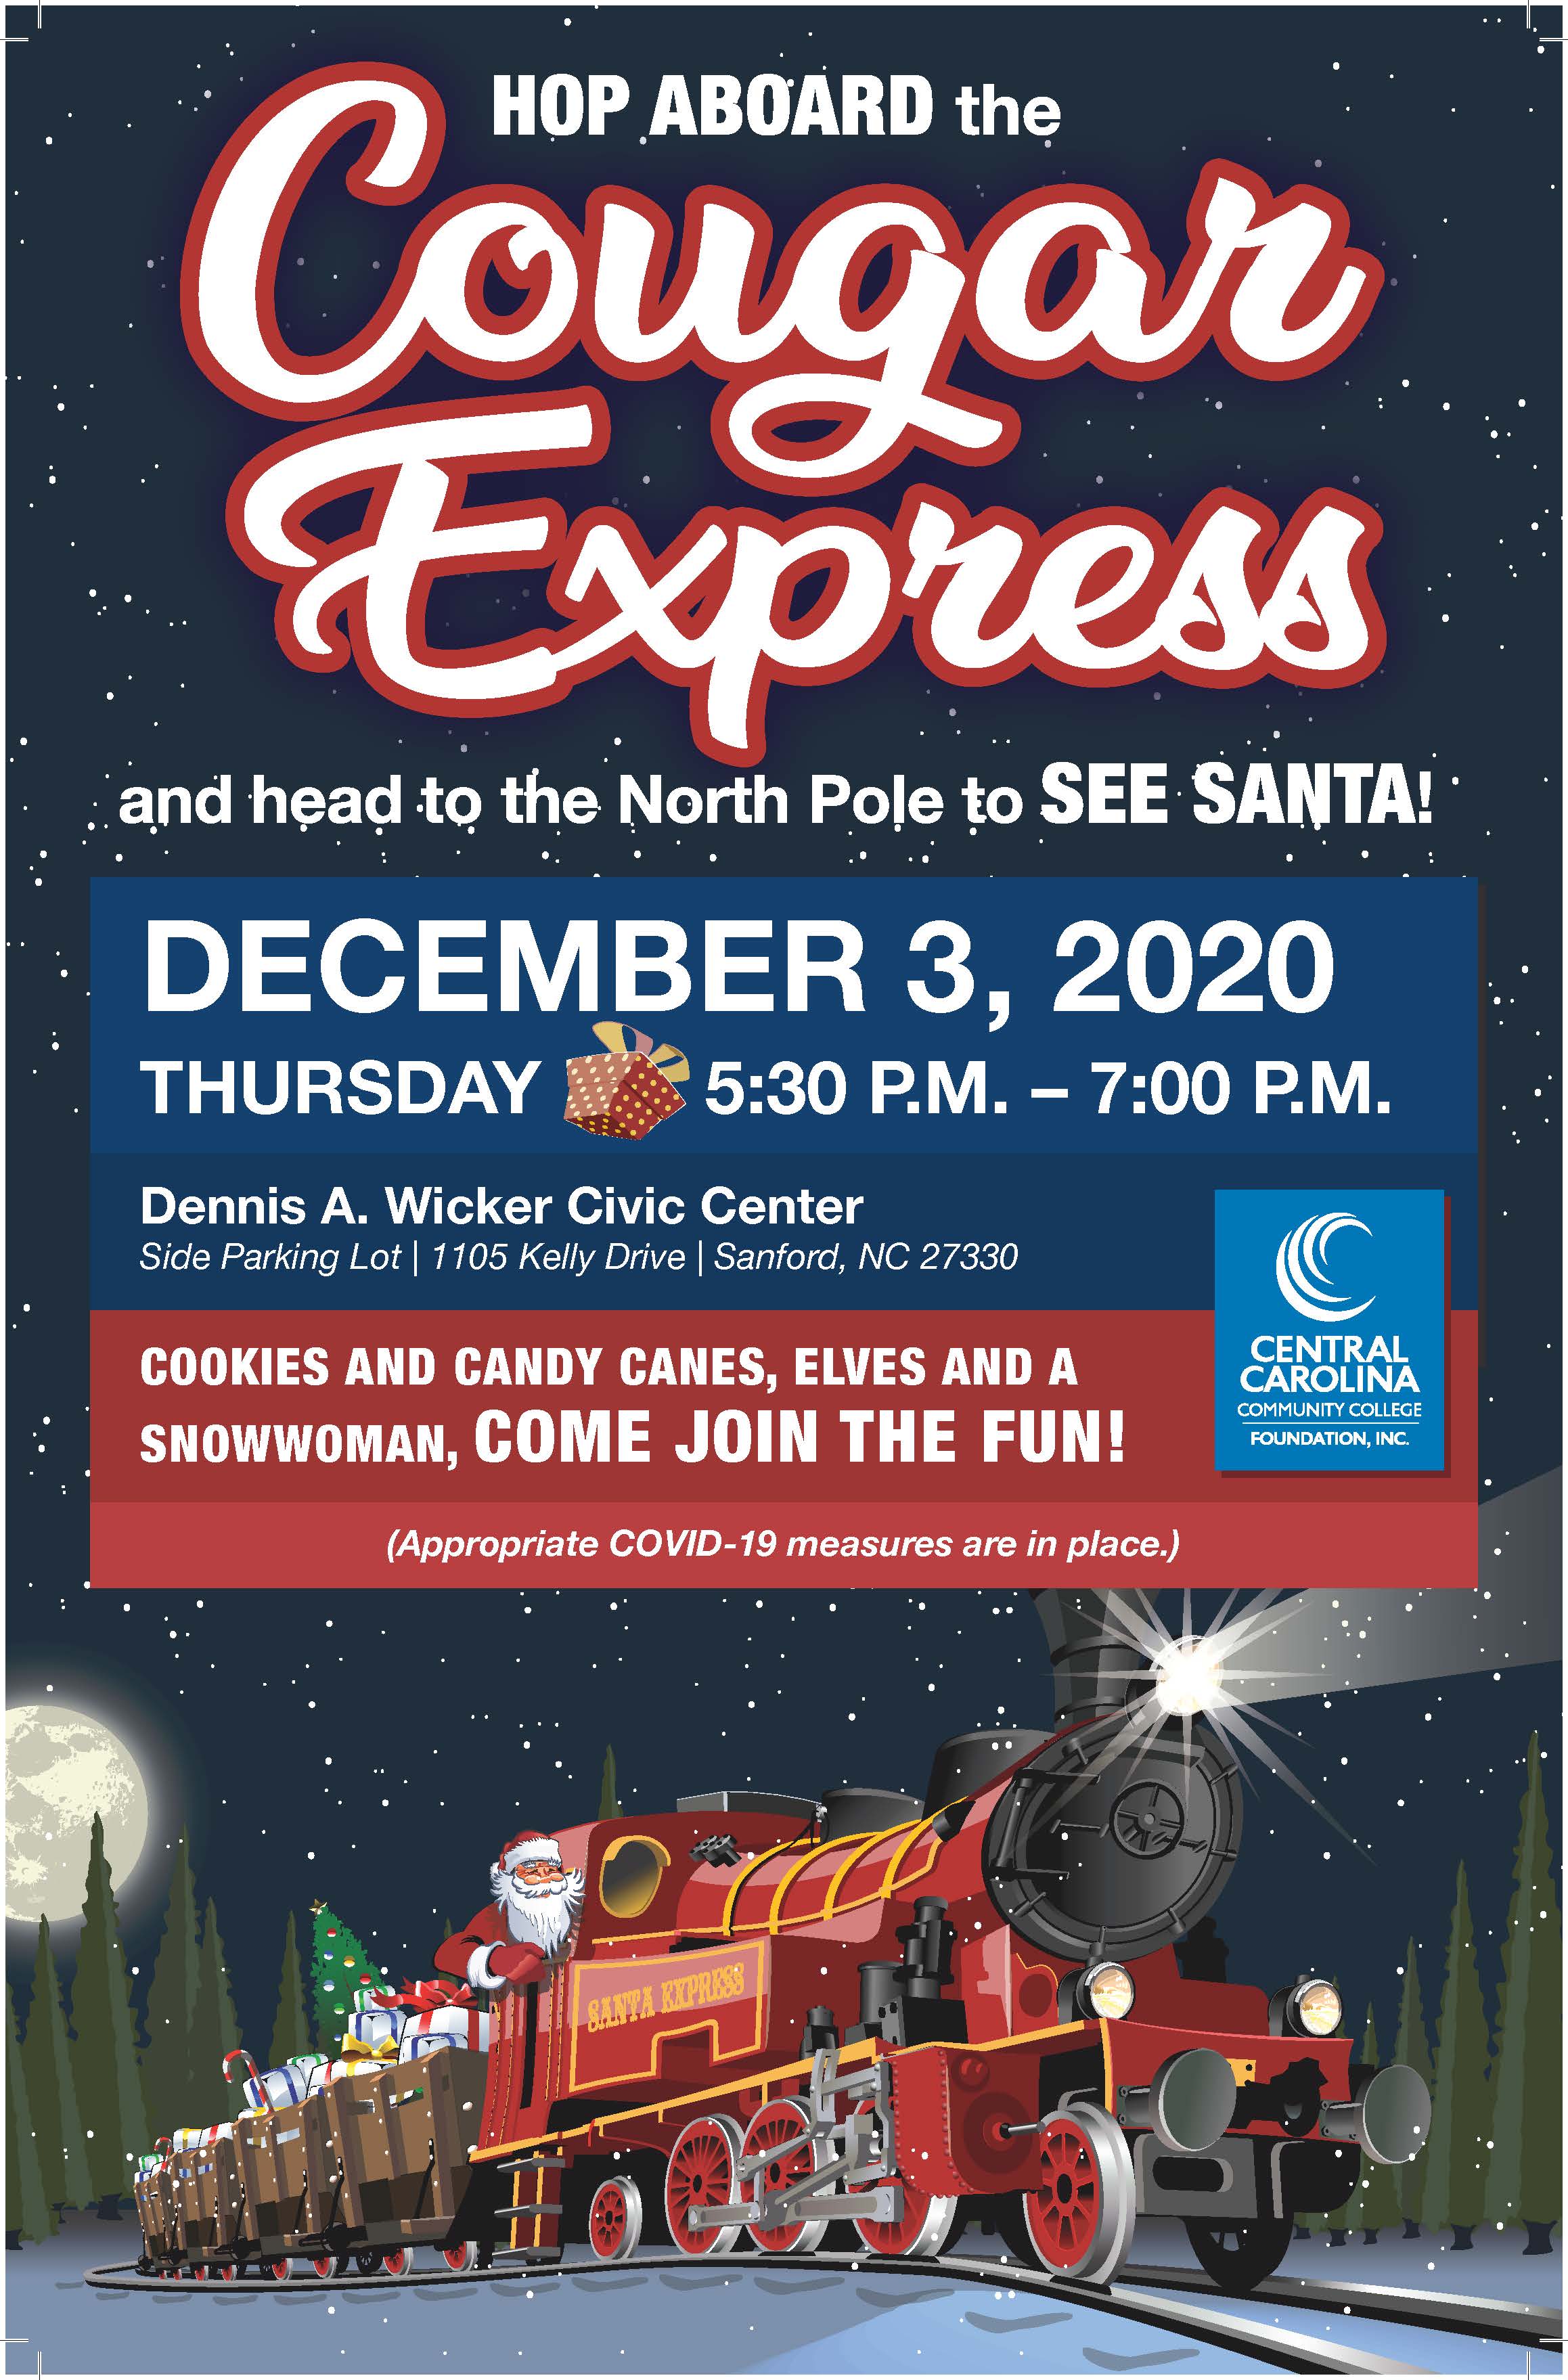 Cougar Express holiday drive-thru event set for Dec. 3